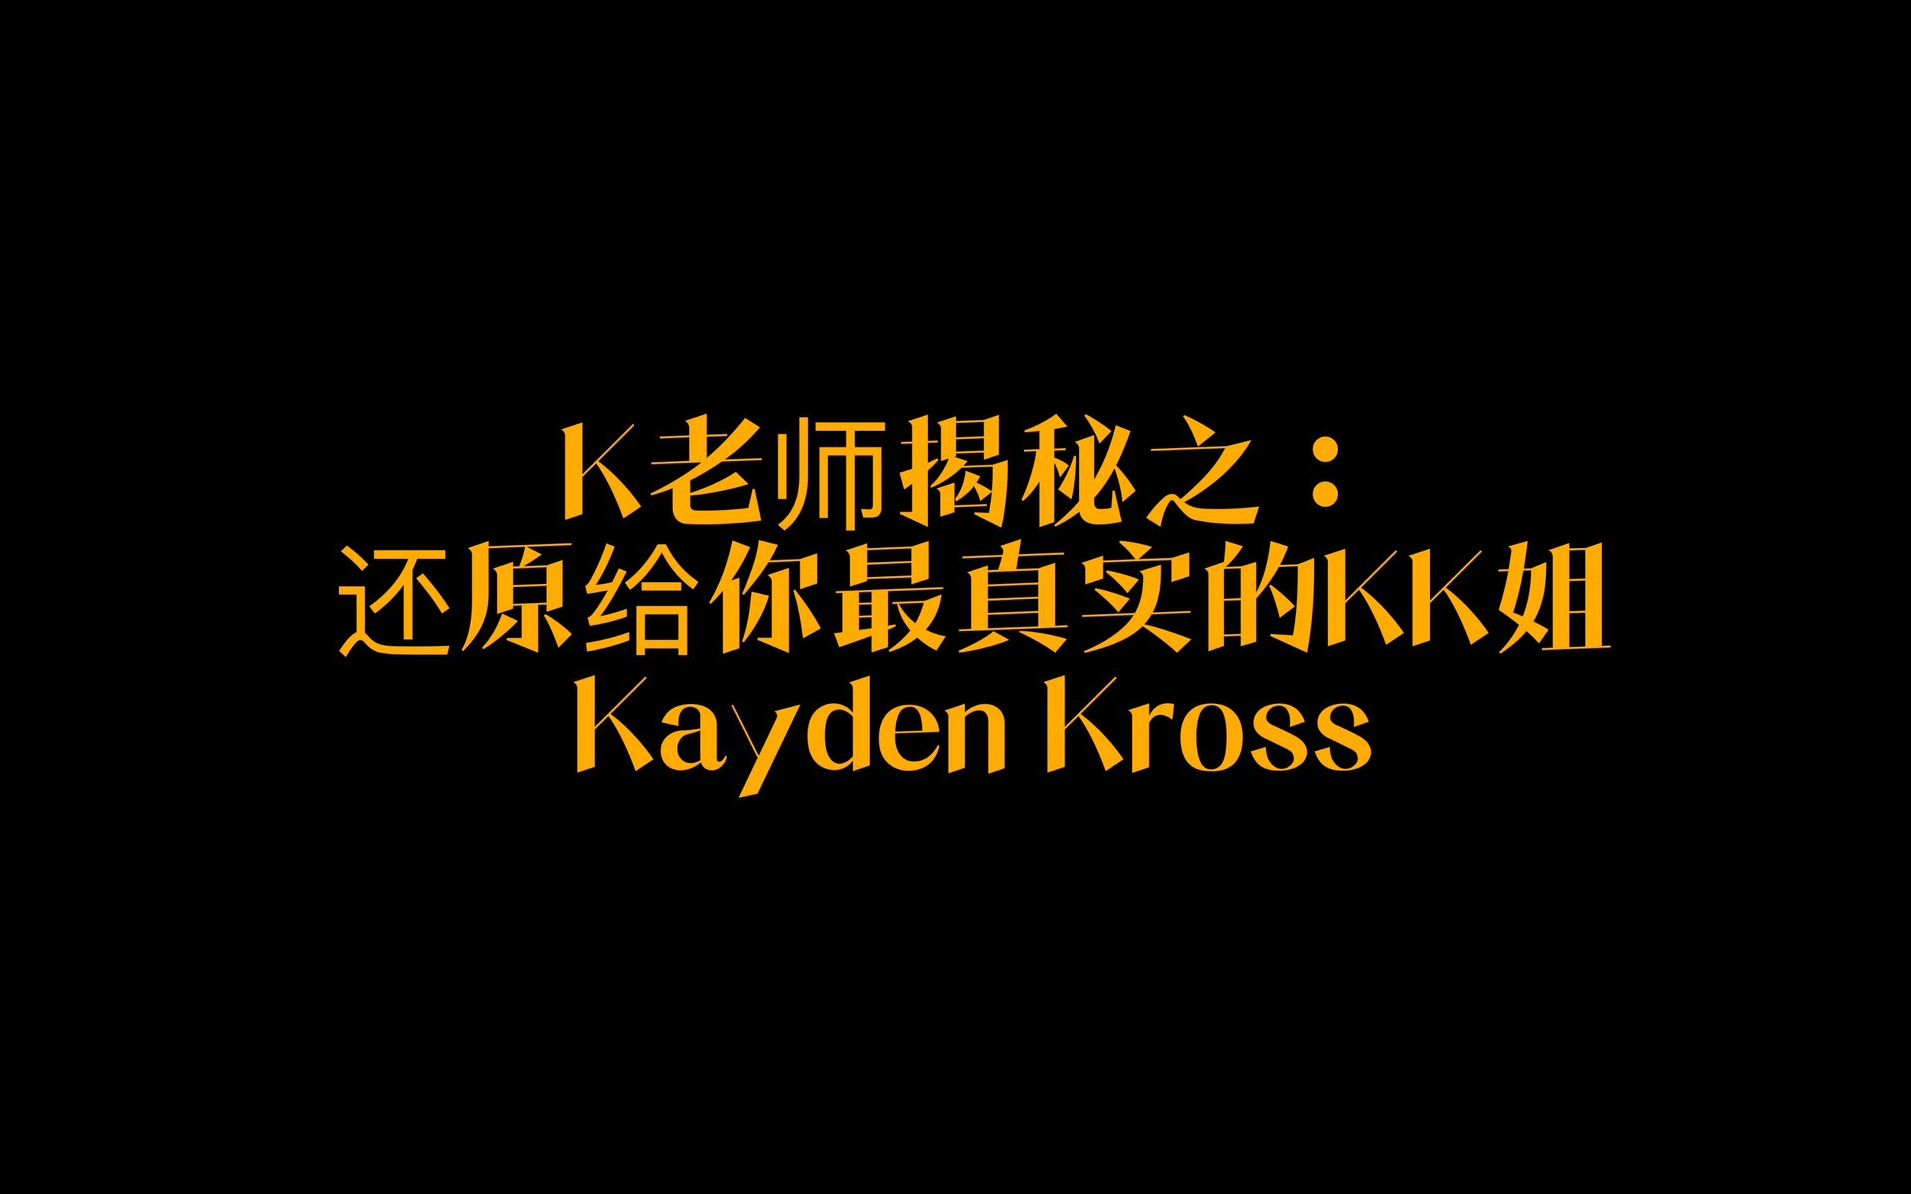 K老师揭秘之：还原给你最真实的Kayden Kross-哔哩哔哩 image